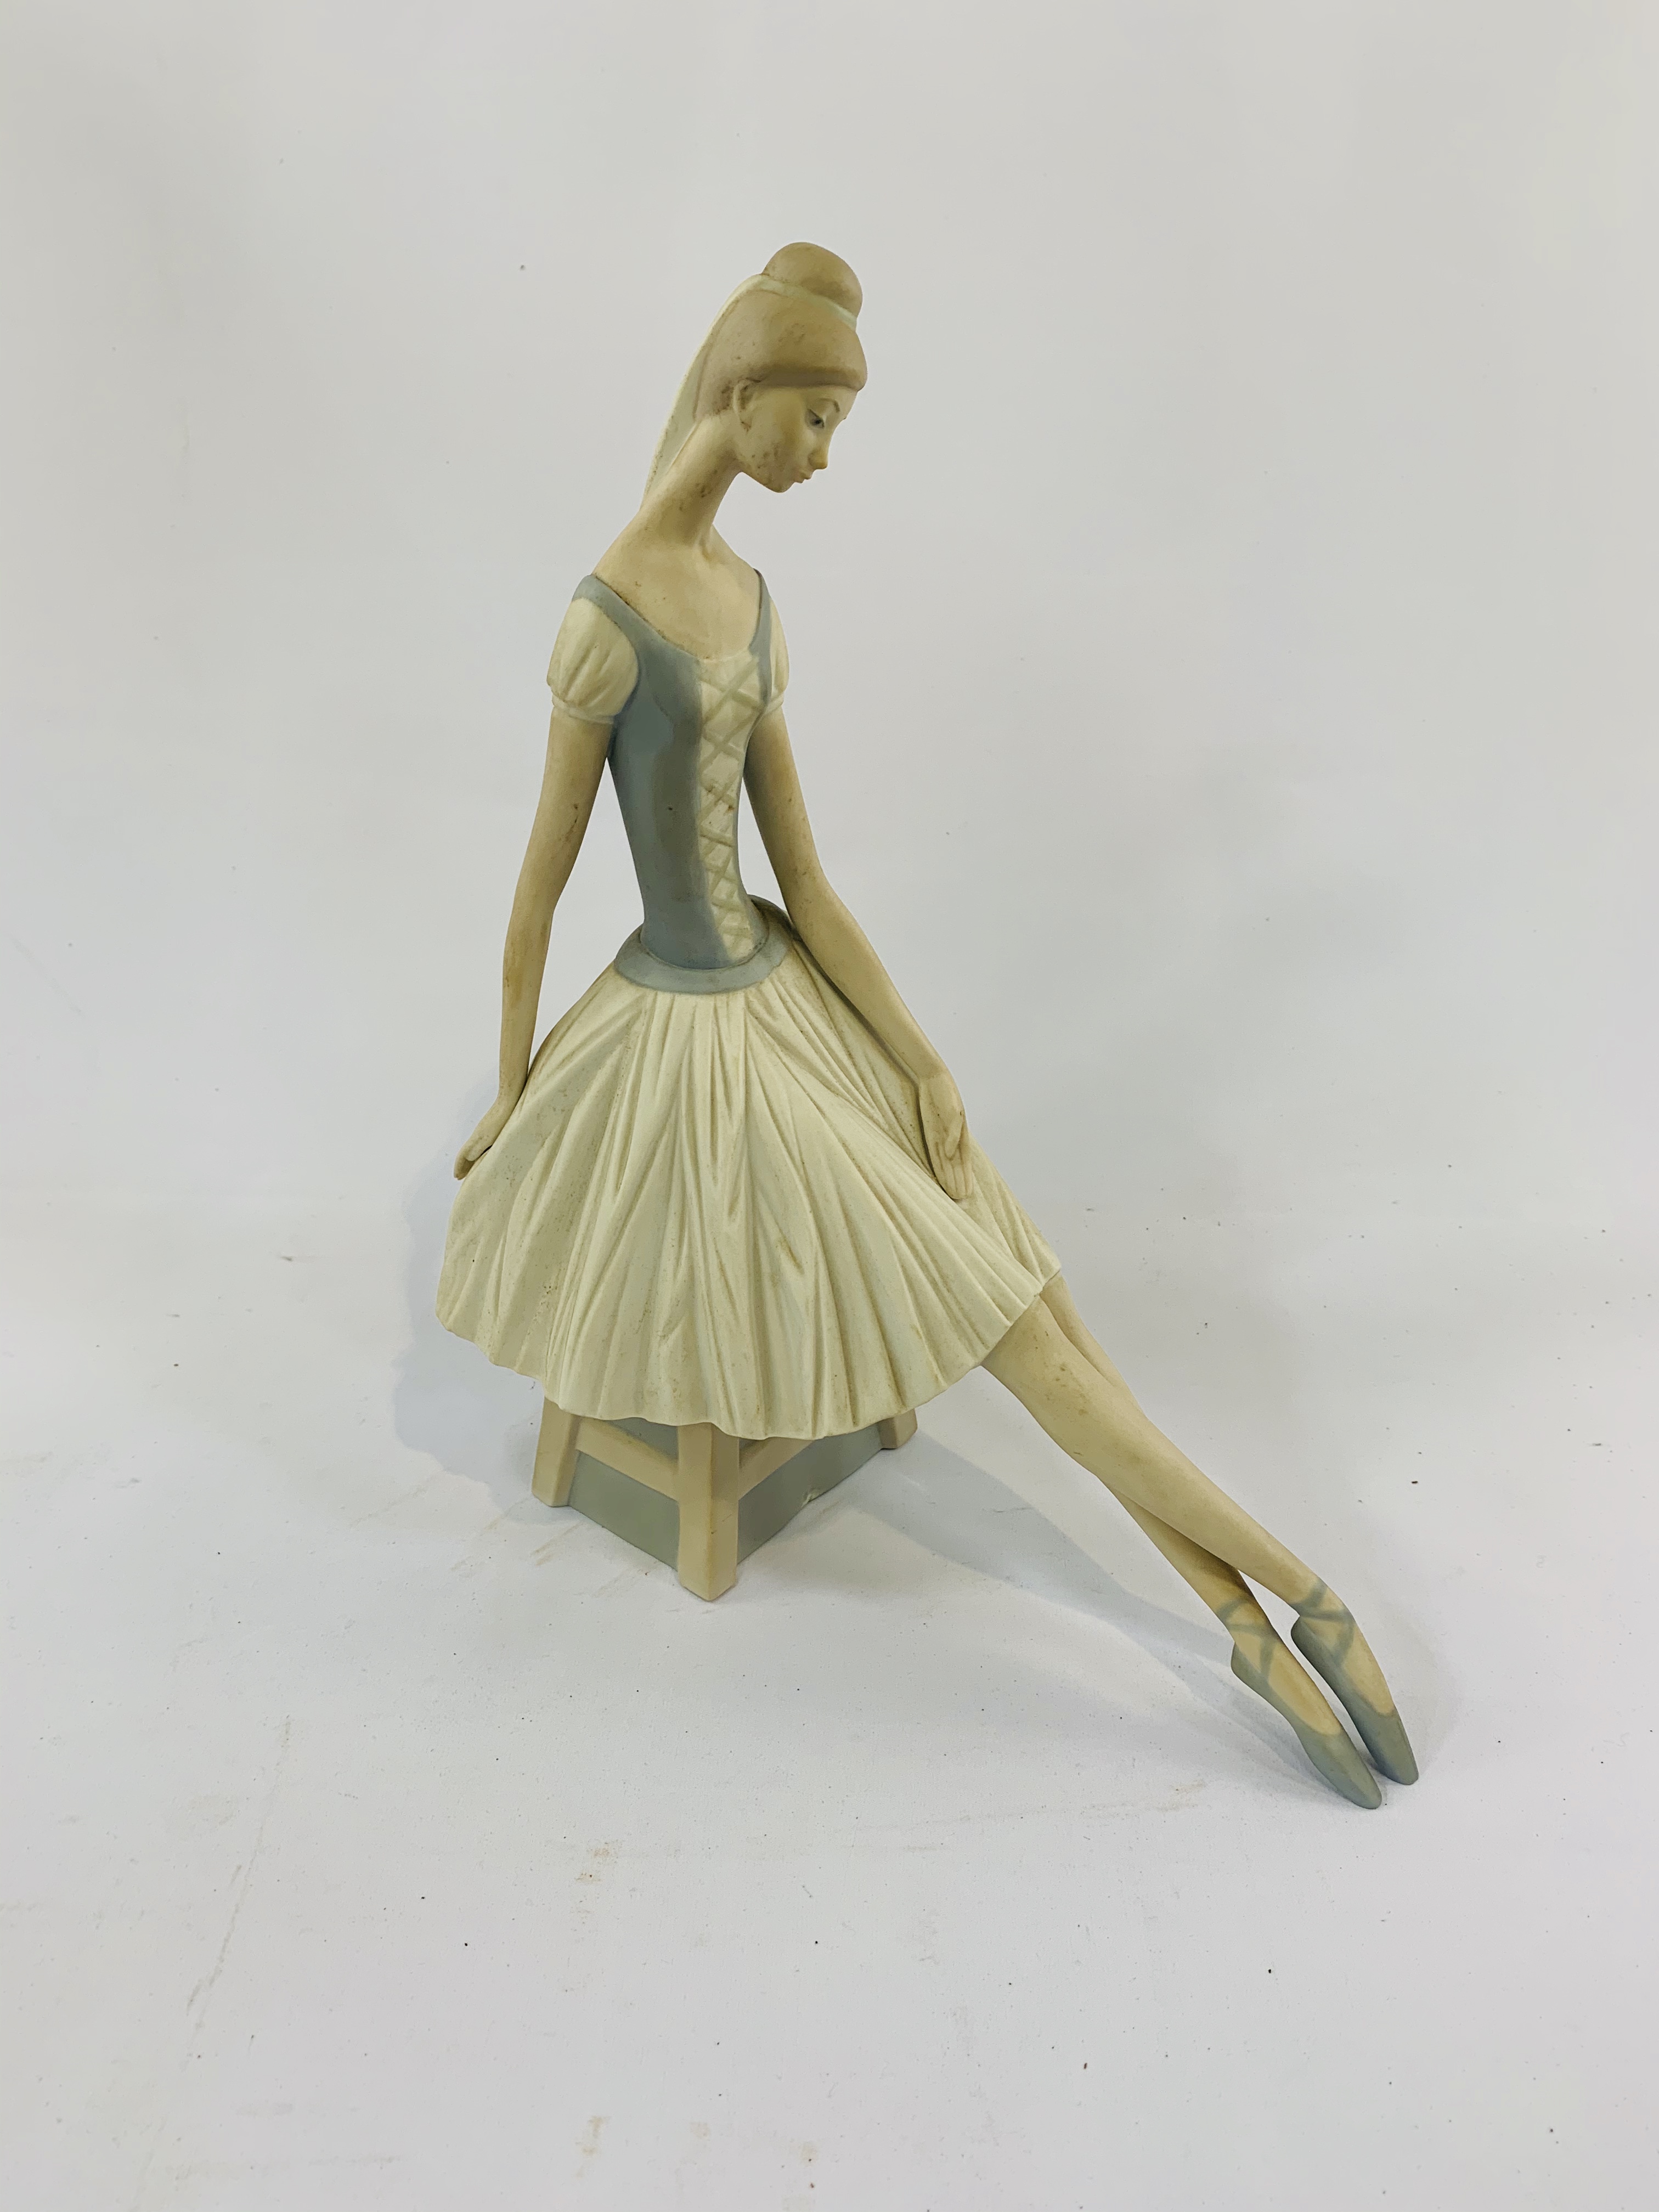 Large Nao figurine of a ballet dancer